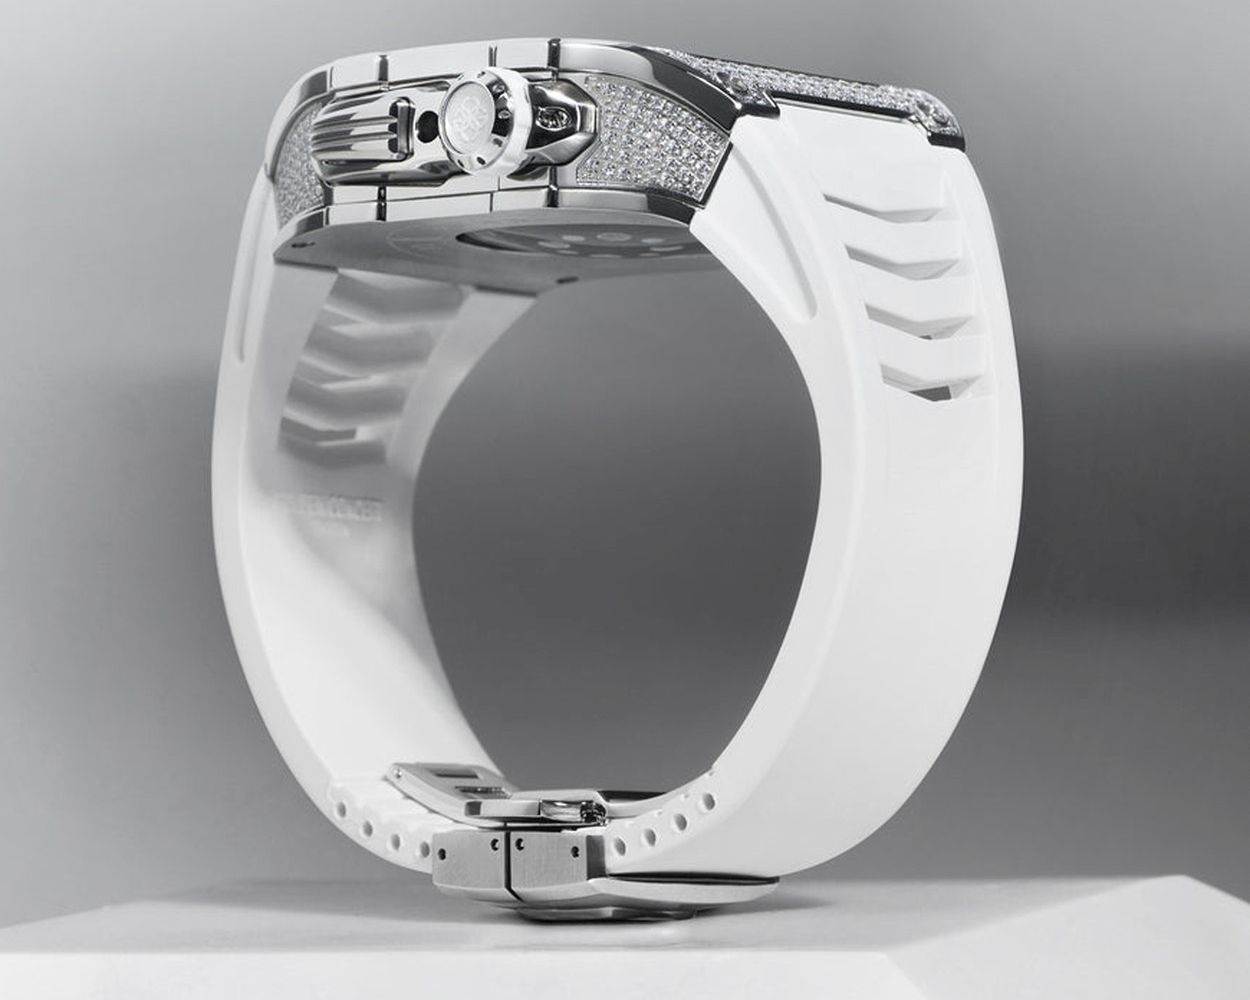  Golden Concept Apple Watch Diamond Edition (1).jpg 